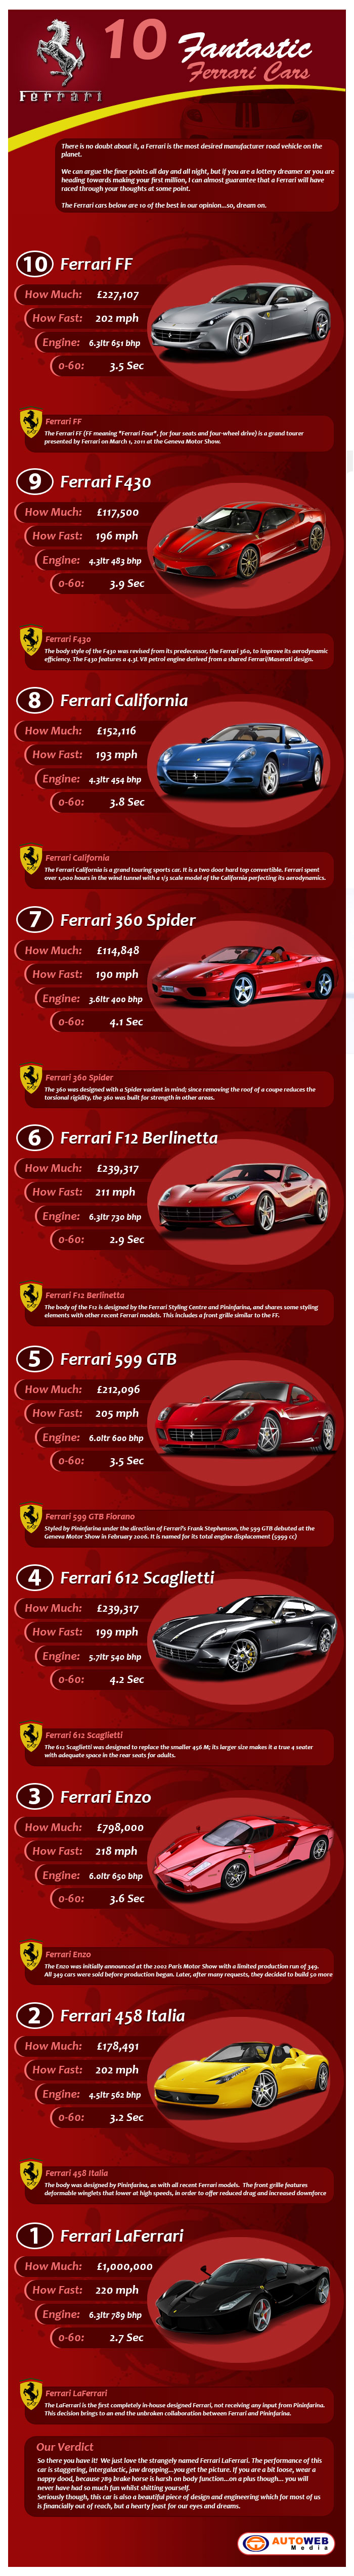 Ferrari infographic. Image by Autoweb.